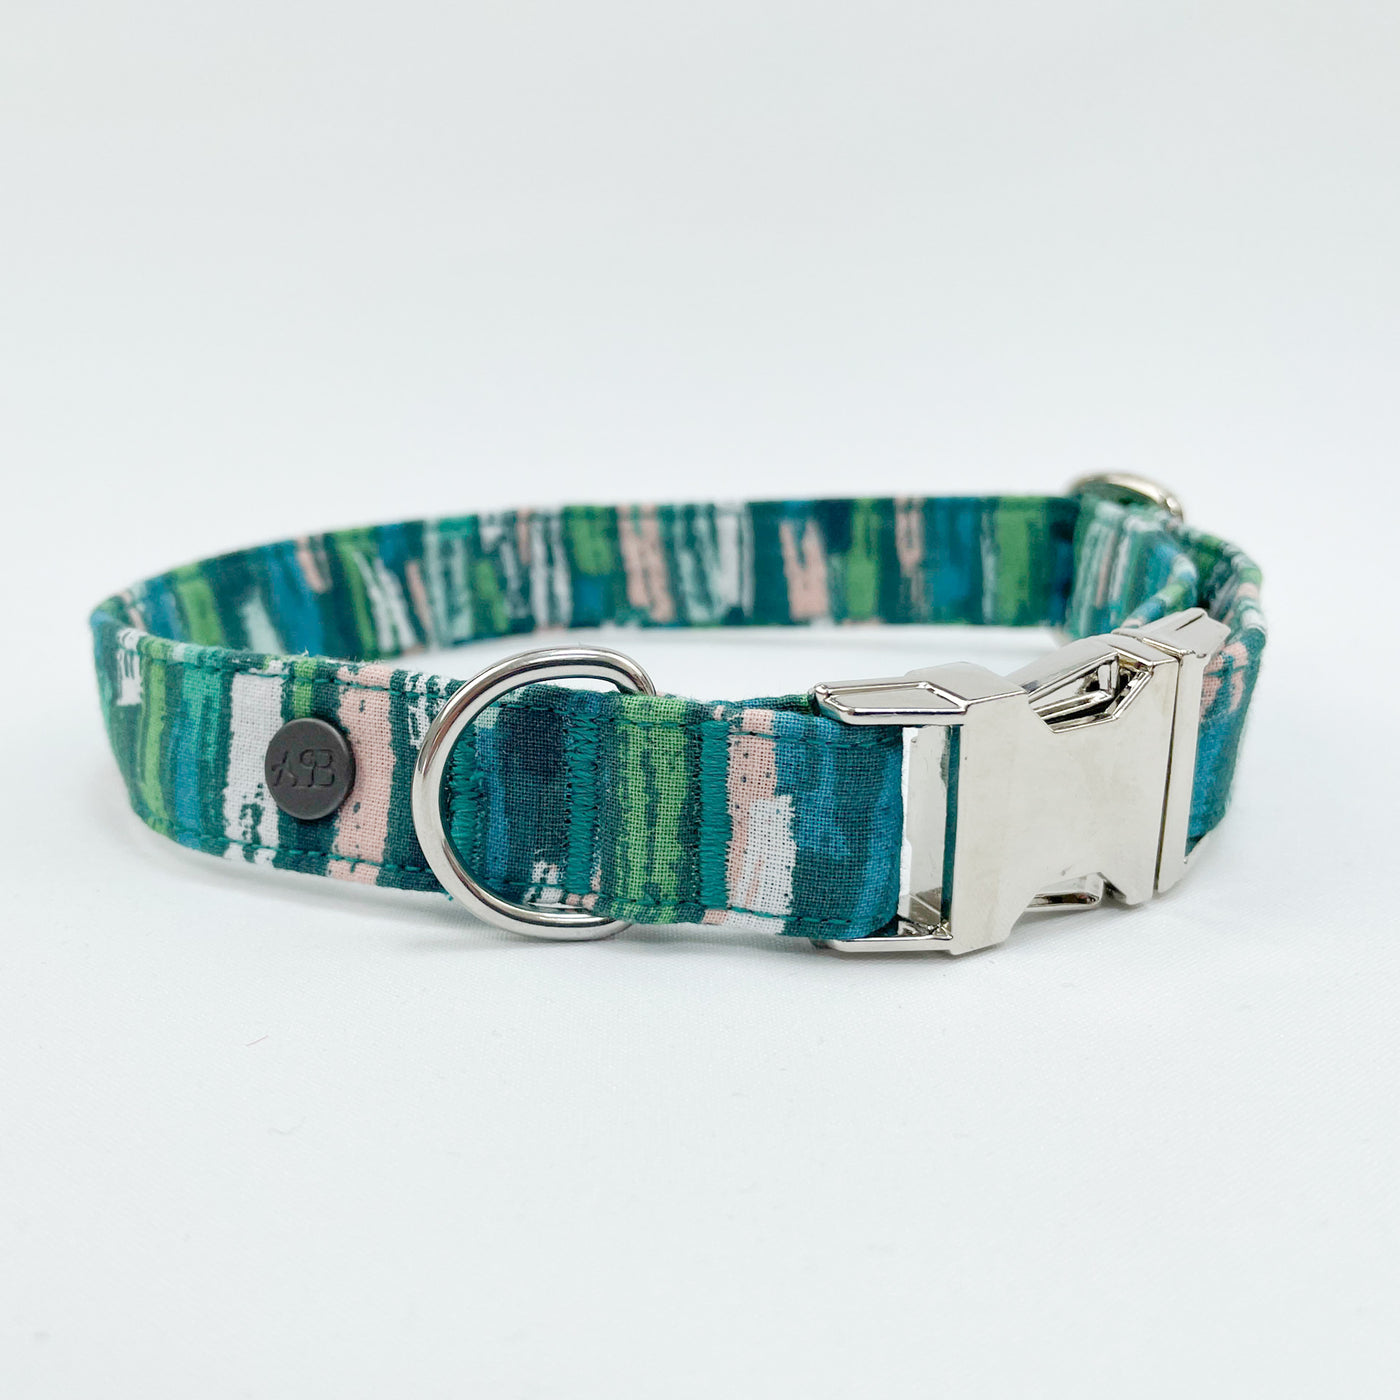 Autumn Stripe dog collar with chrome hardware.